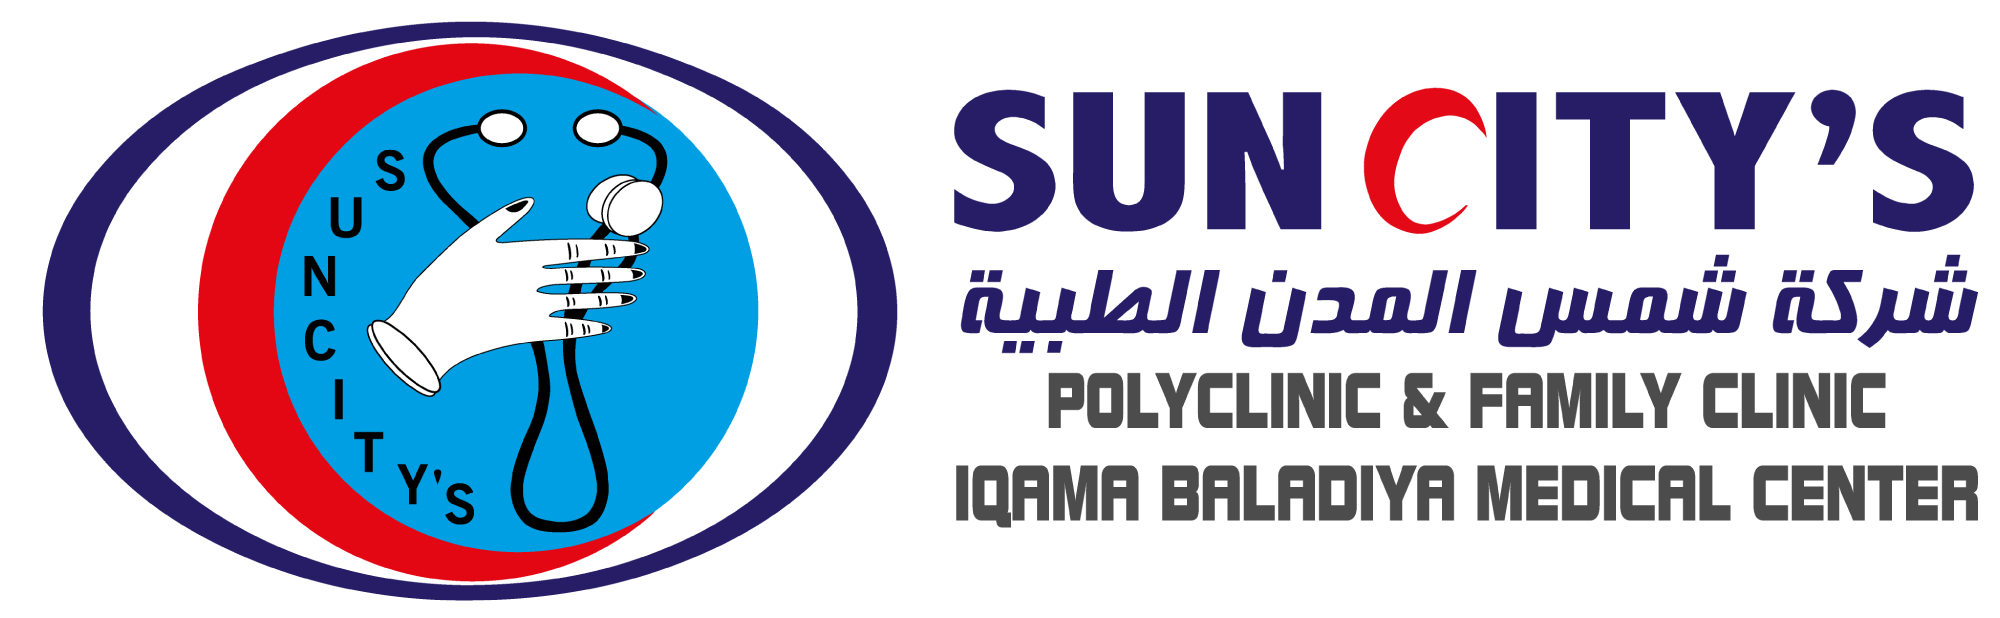 Suncity's Polyclinic